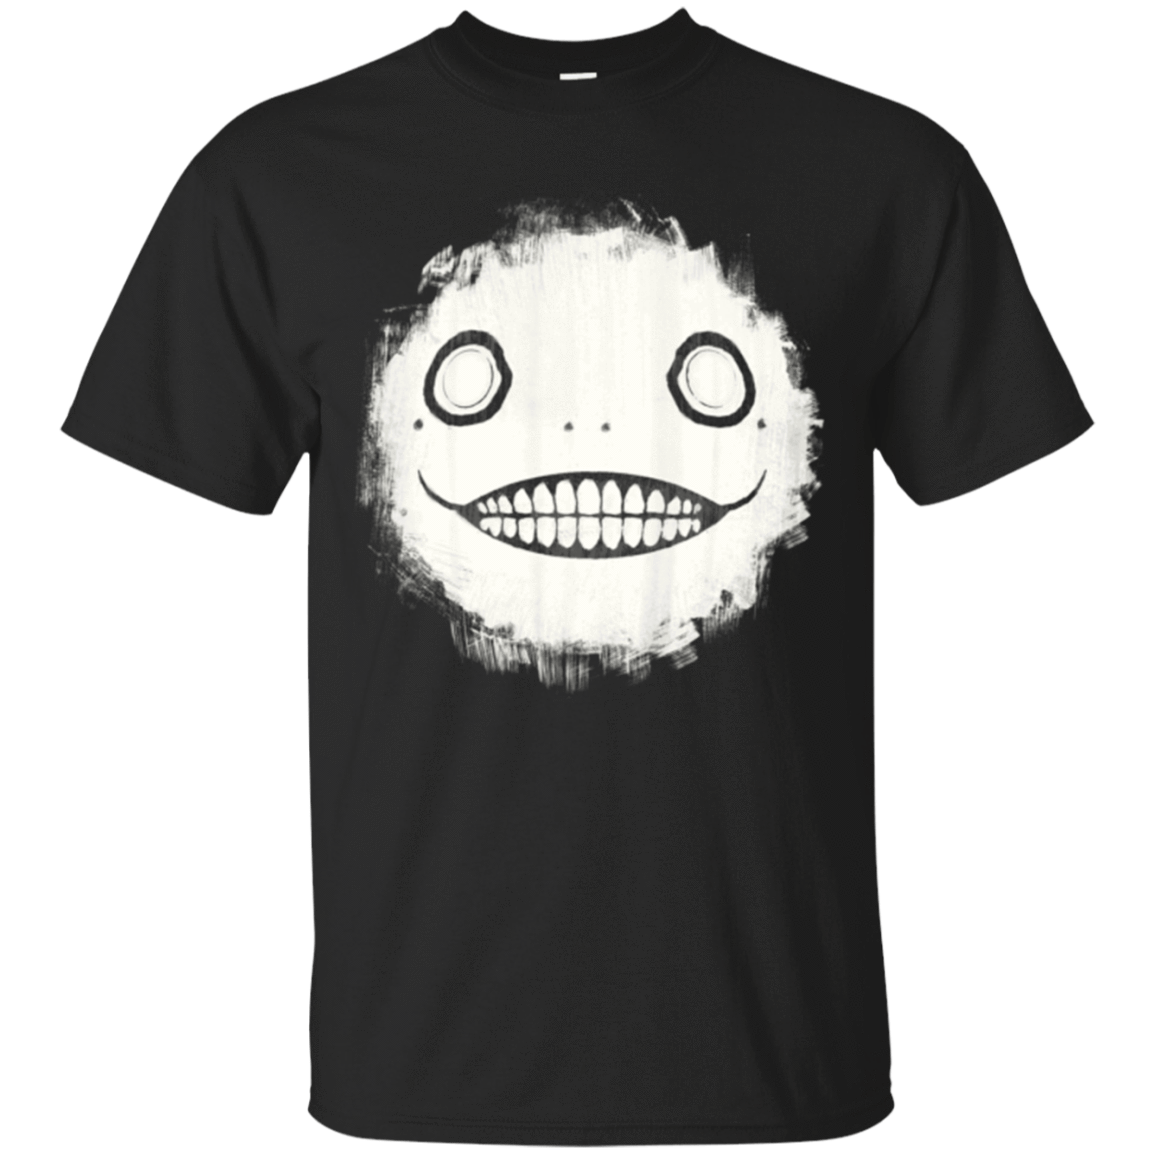 T-Shirts Black / Small Machine Head T-Shirt